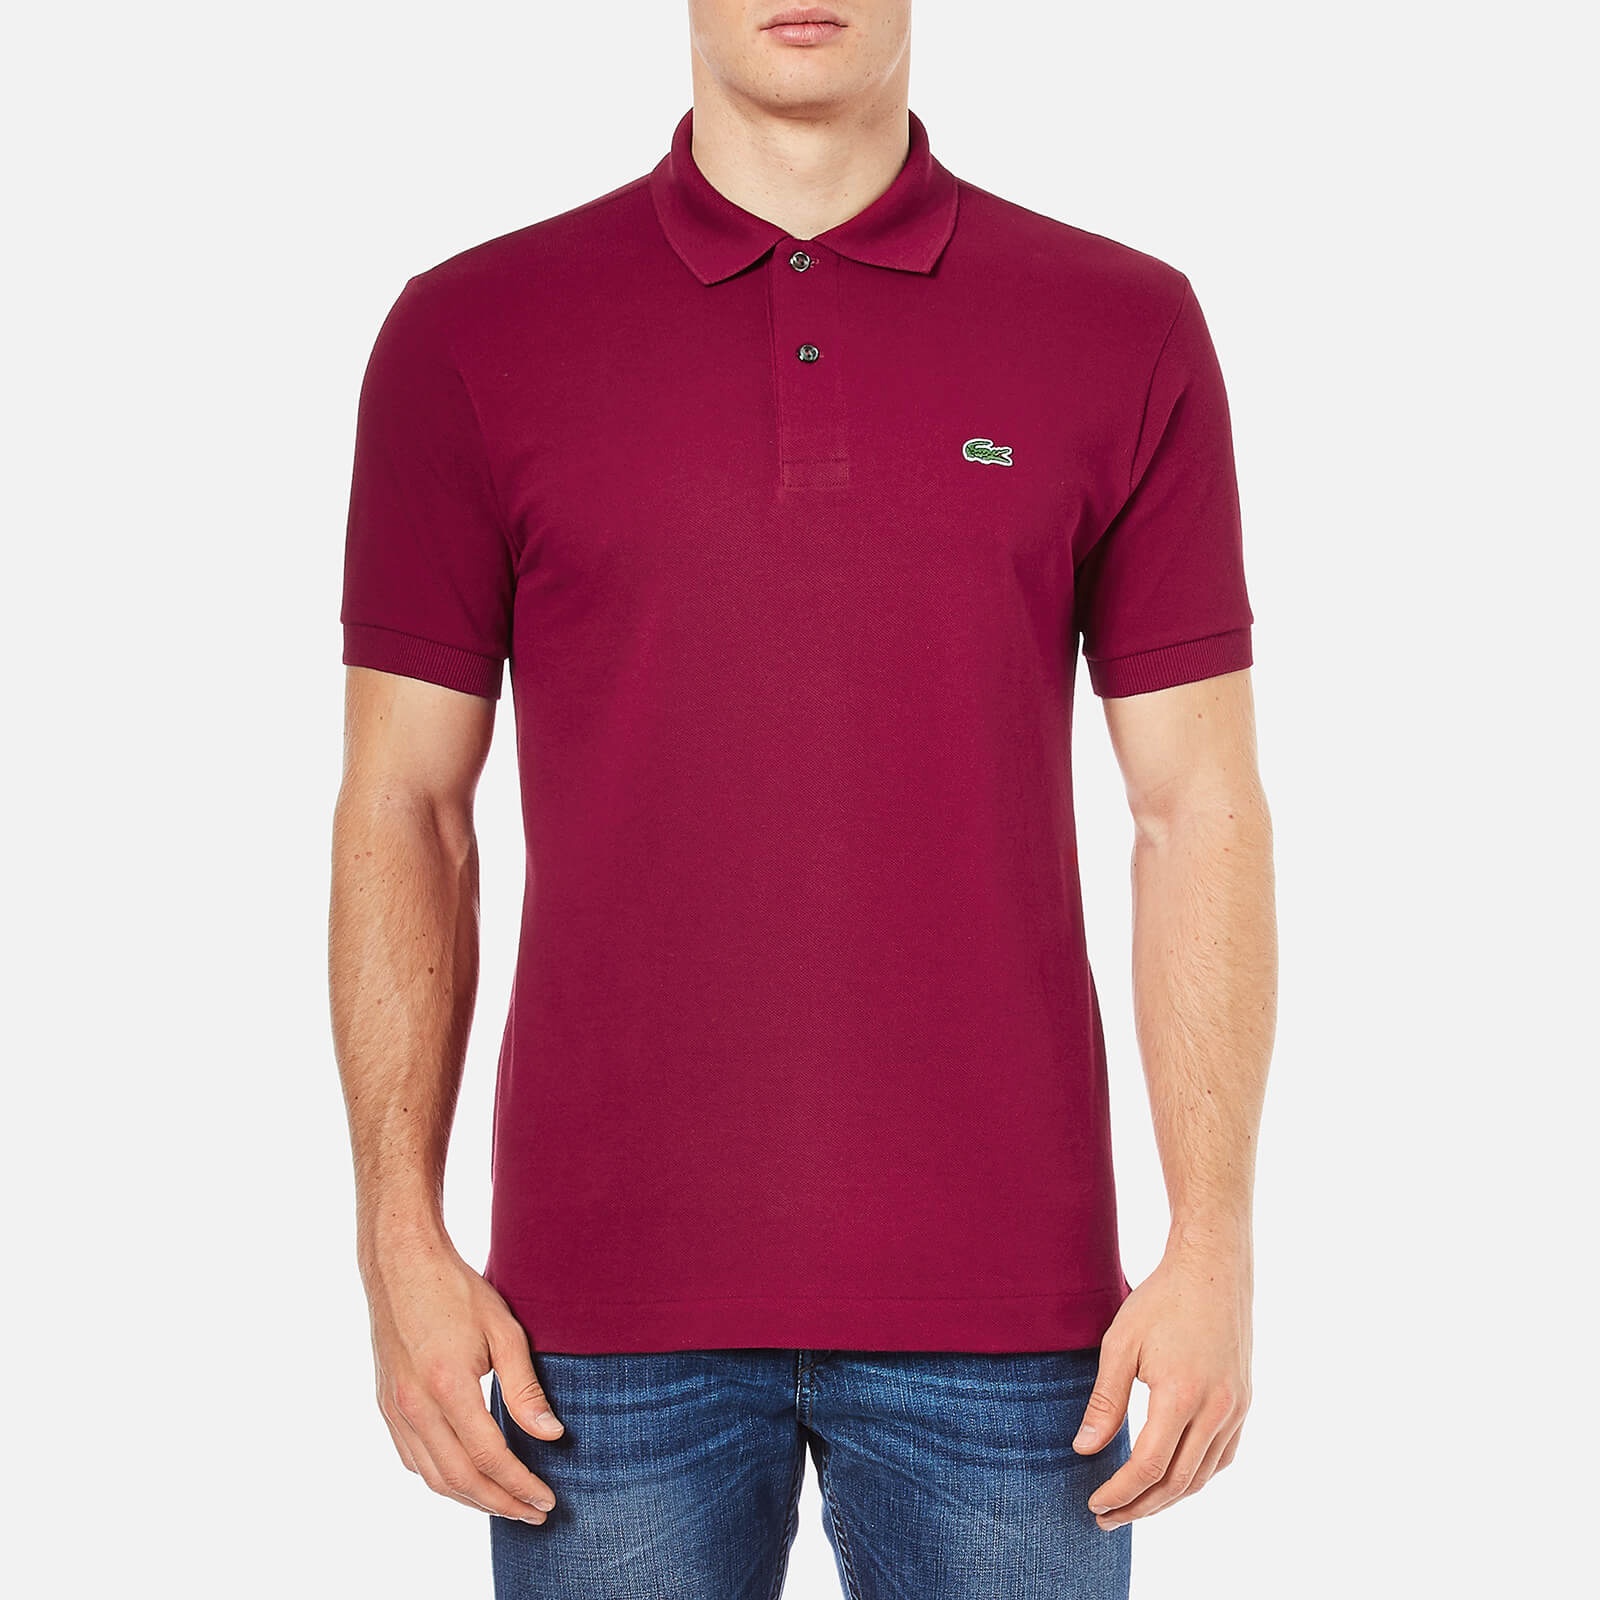 Lacoste Men's Classic Polo Shirt - Burgundy - 1